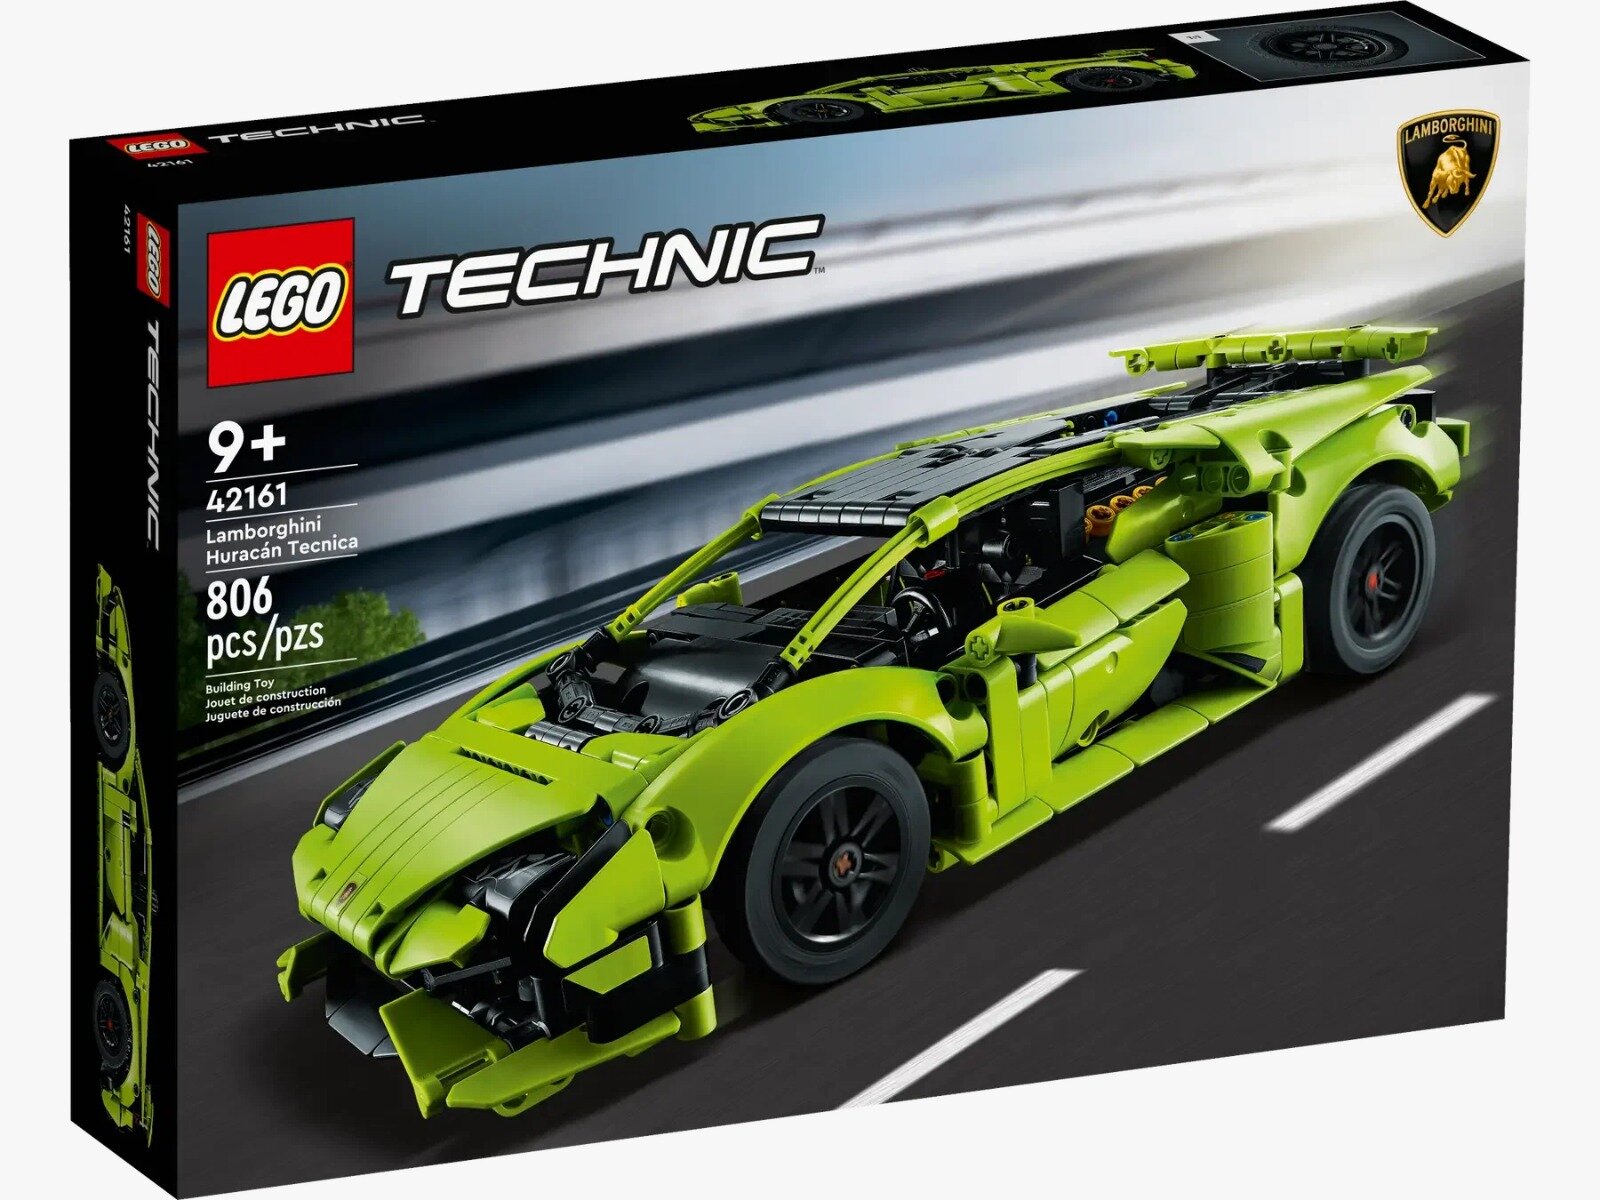 Конструктор LEGO Technic 42161 Lamborghini Huracán Tecnica, 806 дет.